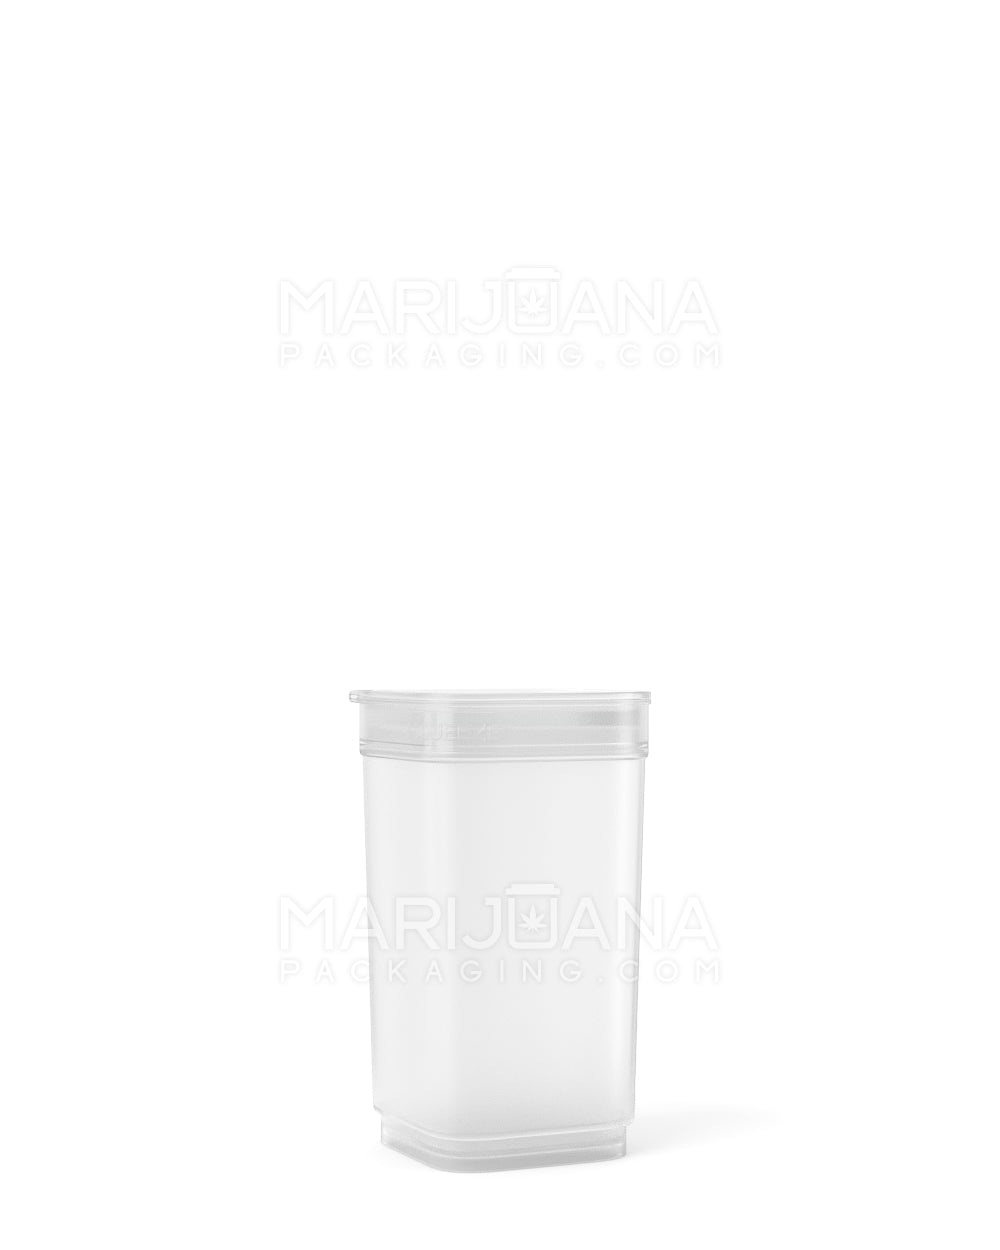 POLLEN GEAR | Child Resistant 100% Recyclable Transparent Clear Pop Box Pop Top Bottles | 20dr - 3.5g - 590 Count